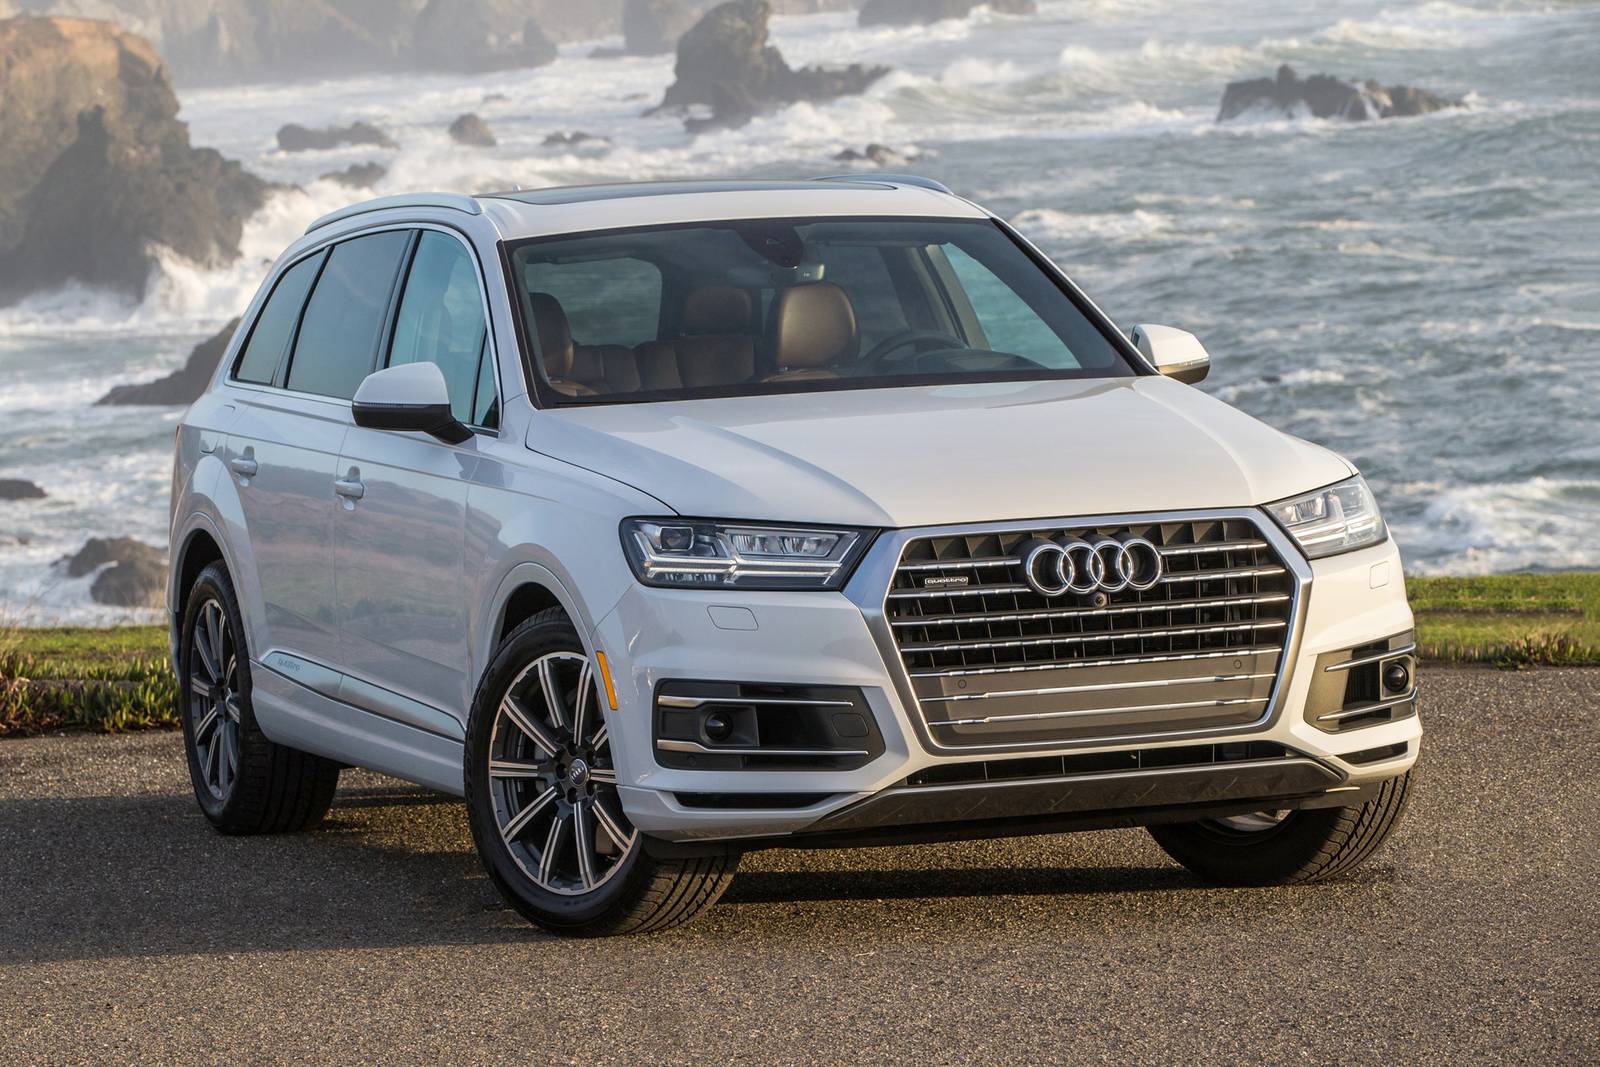 2019 Audi Q7 Review & Ratings | Edmunds